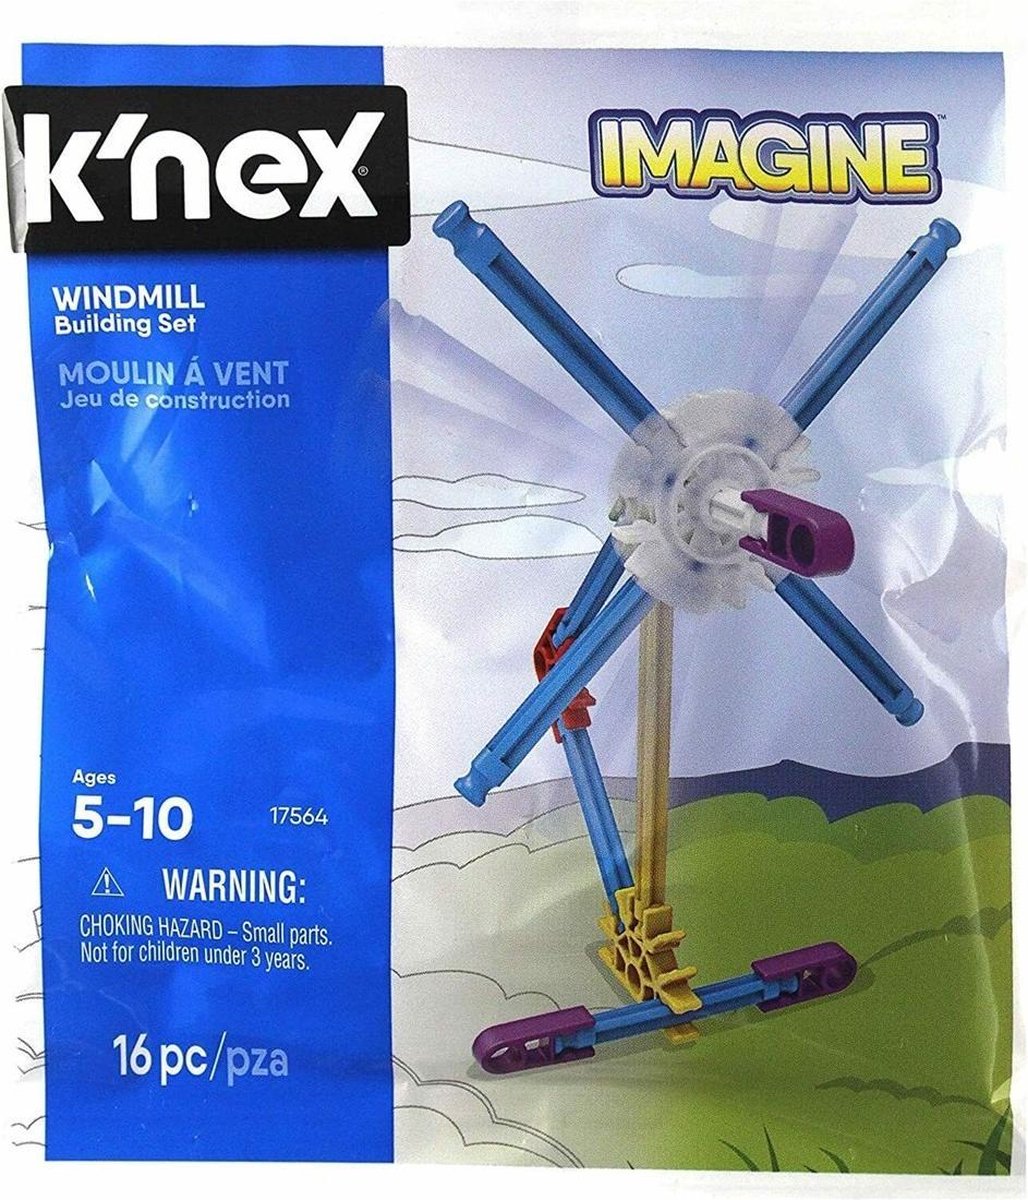 KNEX Imagine Windmill Building Set 16pc